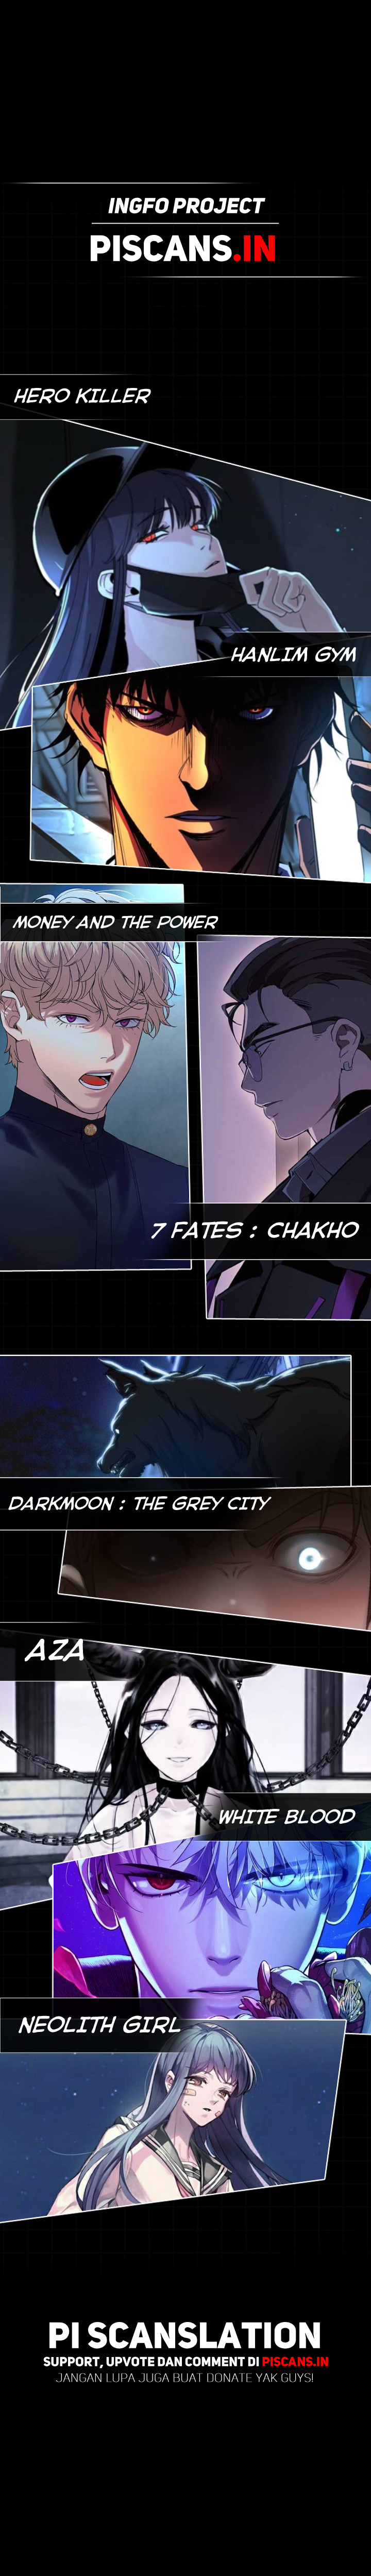 7Fates: Chakho Chapter 48